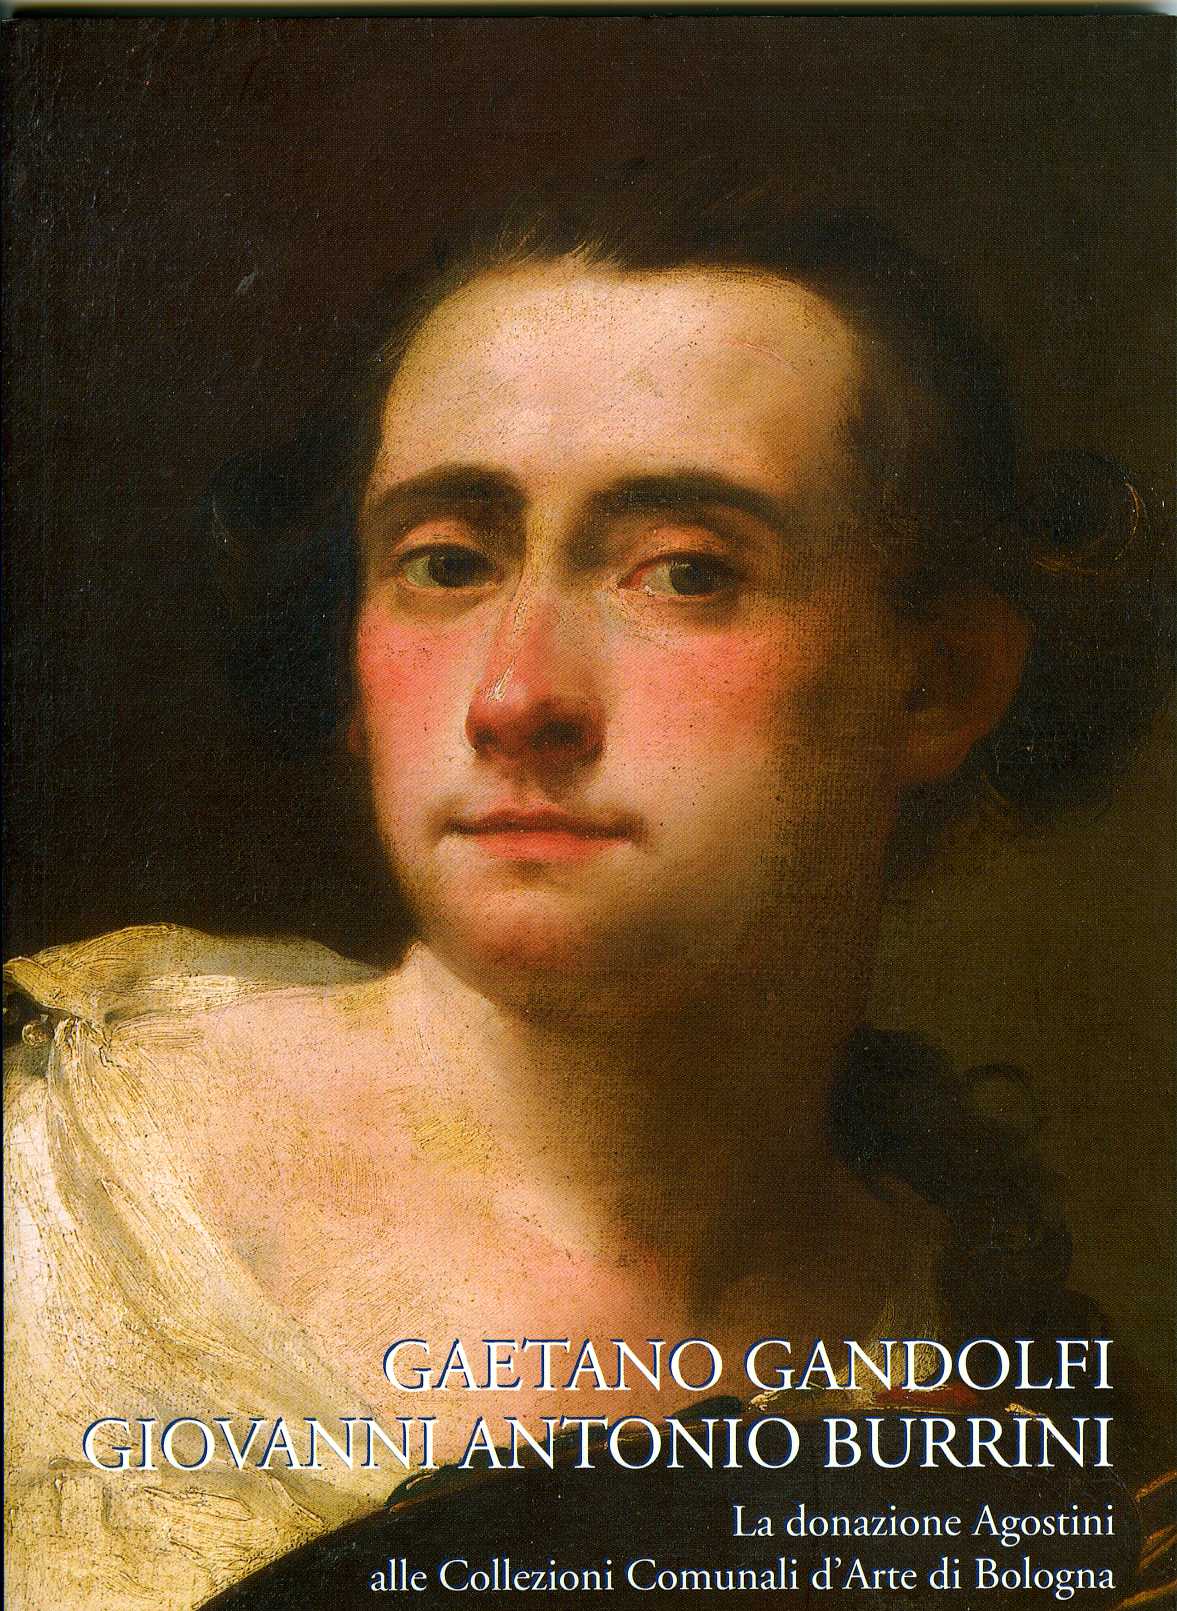 Gaetano Gandolfi